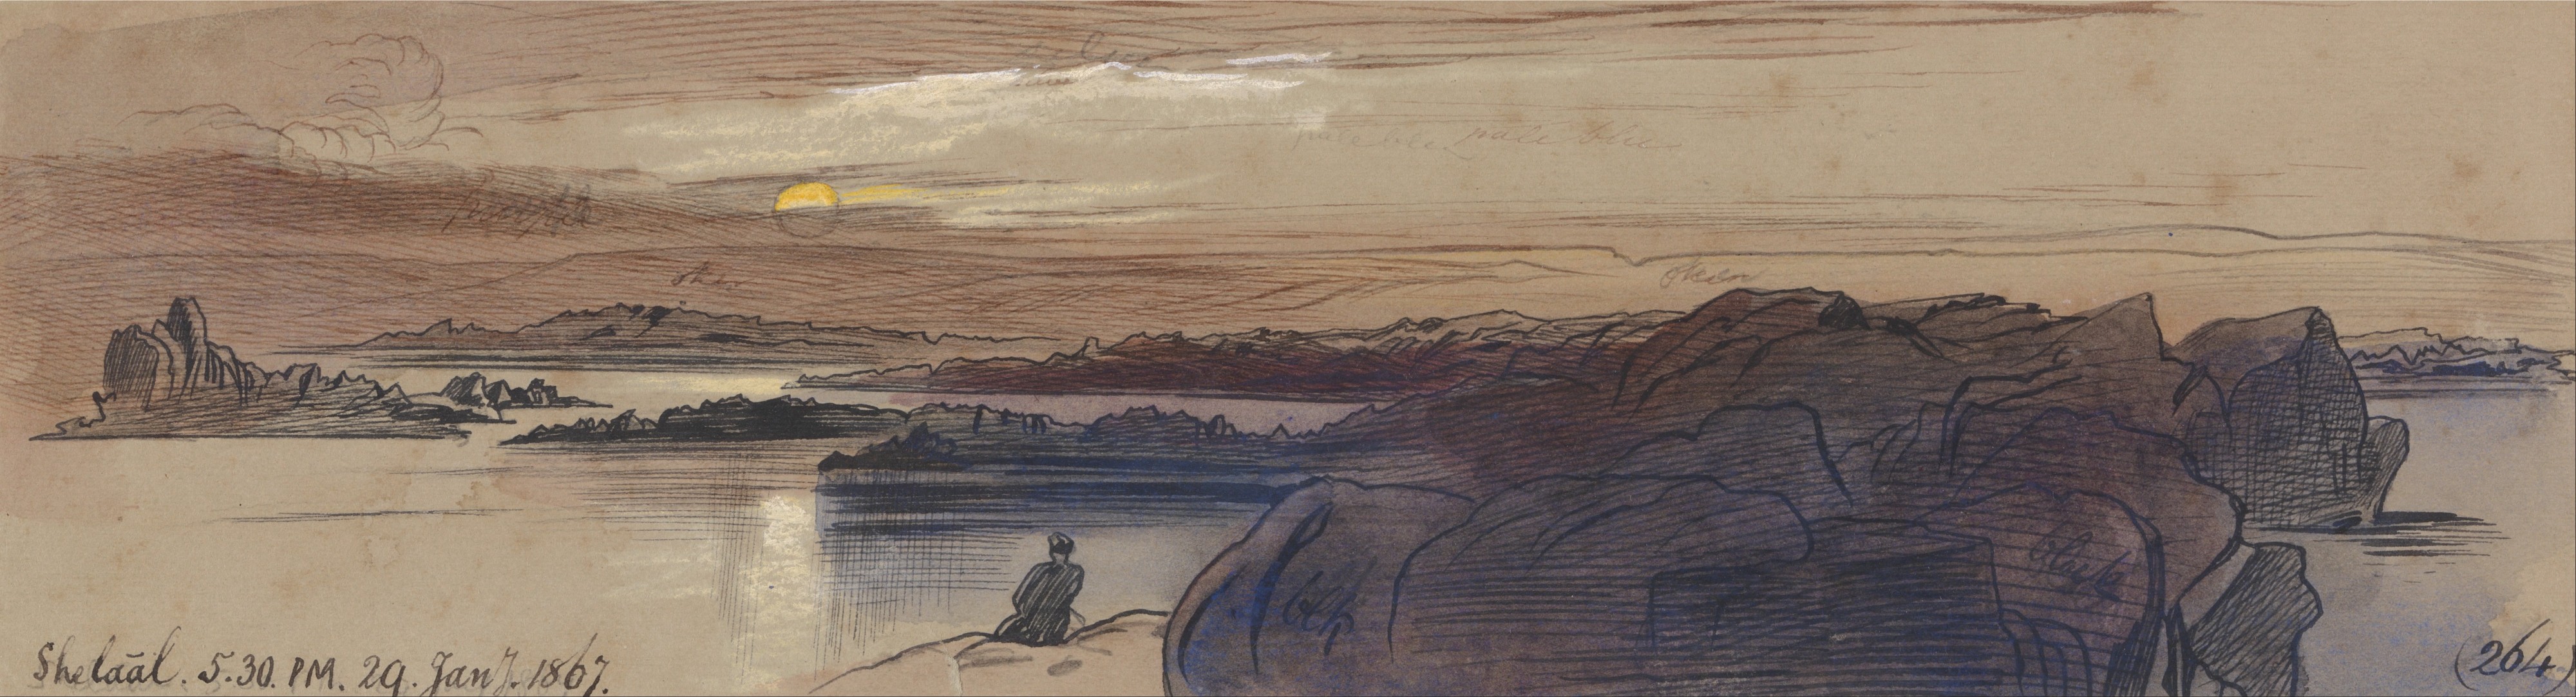 Edward Lear - Shelaal, 5-30 am, 29 January 1867 (264) - Google Art Project